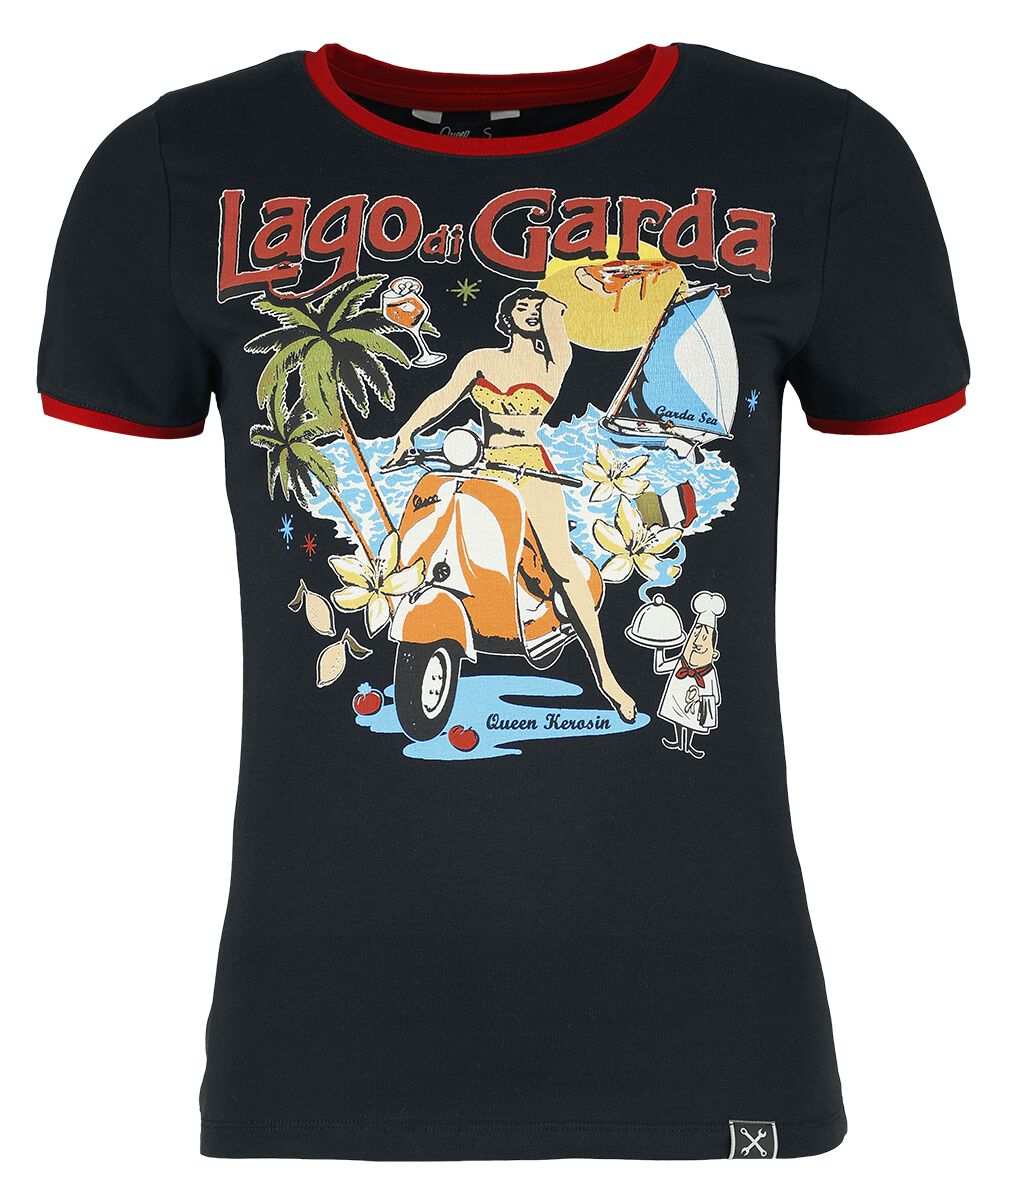 Queen Kerosin Lago Di Garda T-Shirt schwarz rot in XXL